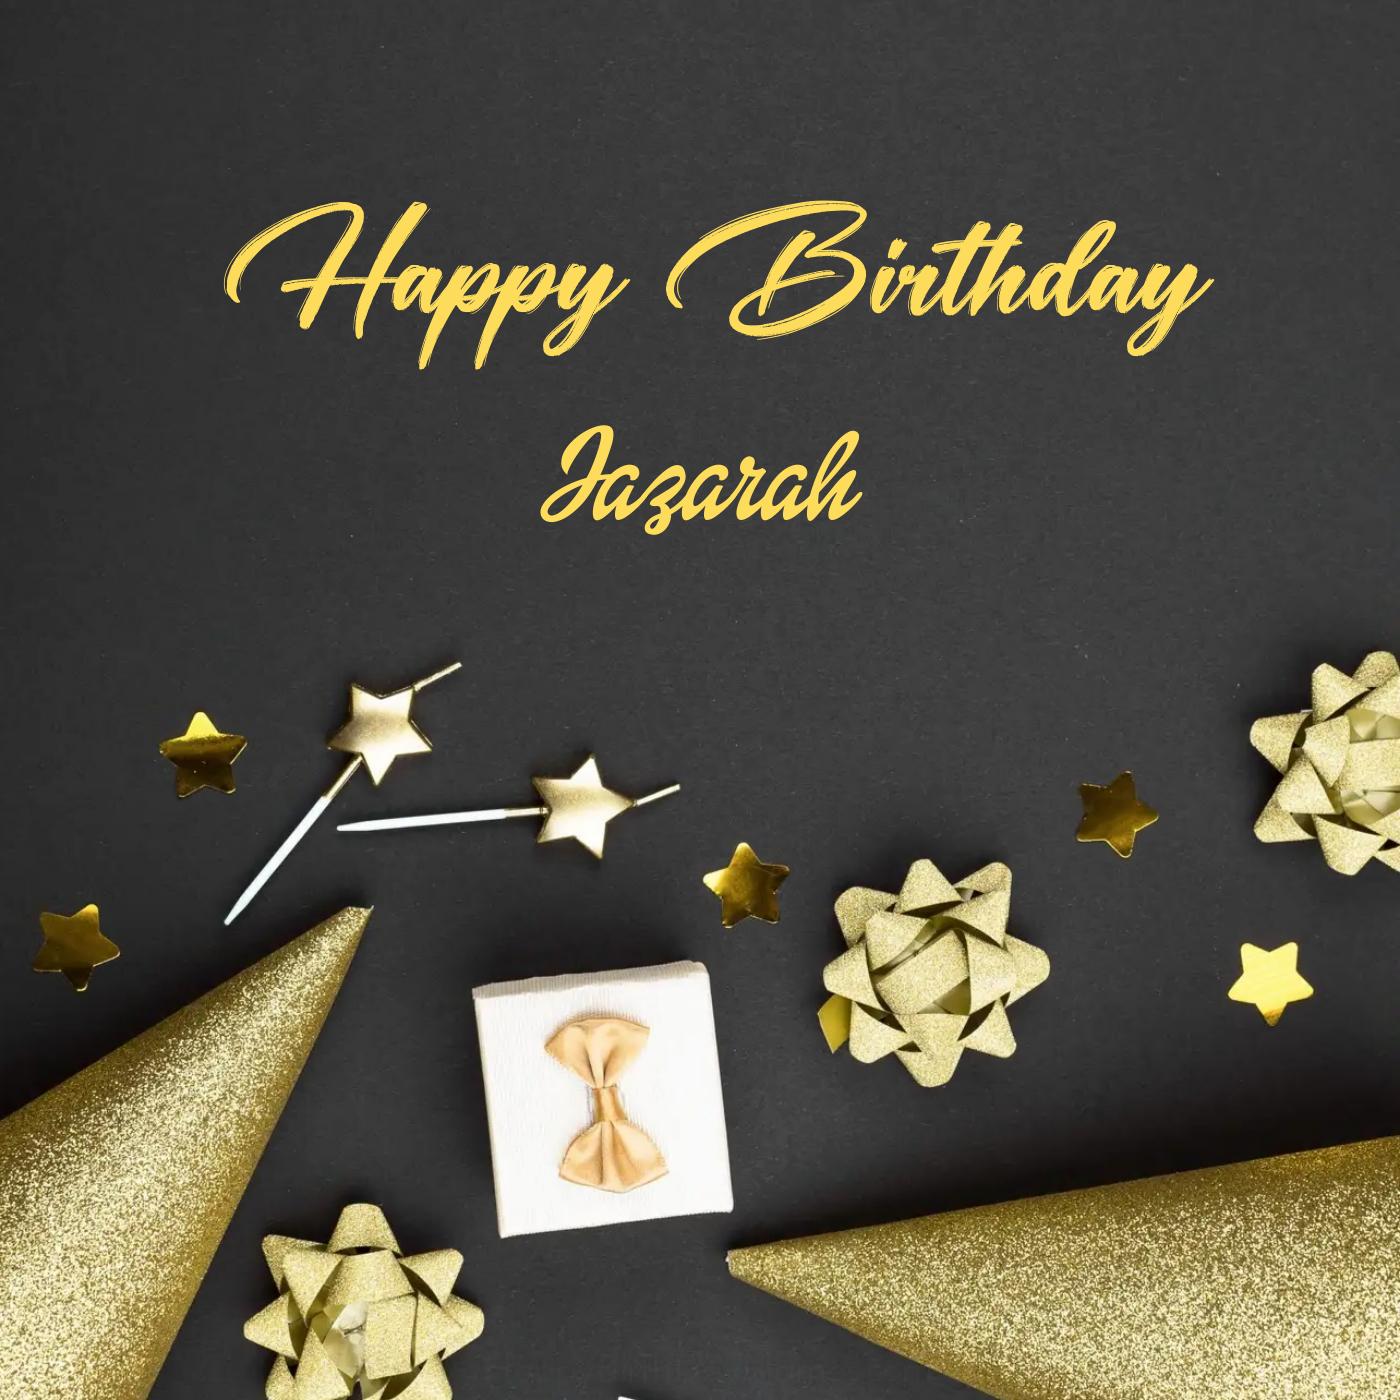 Happy Birthday Jazarah Golden Theme Card